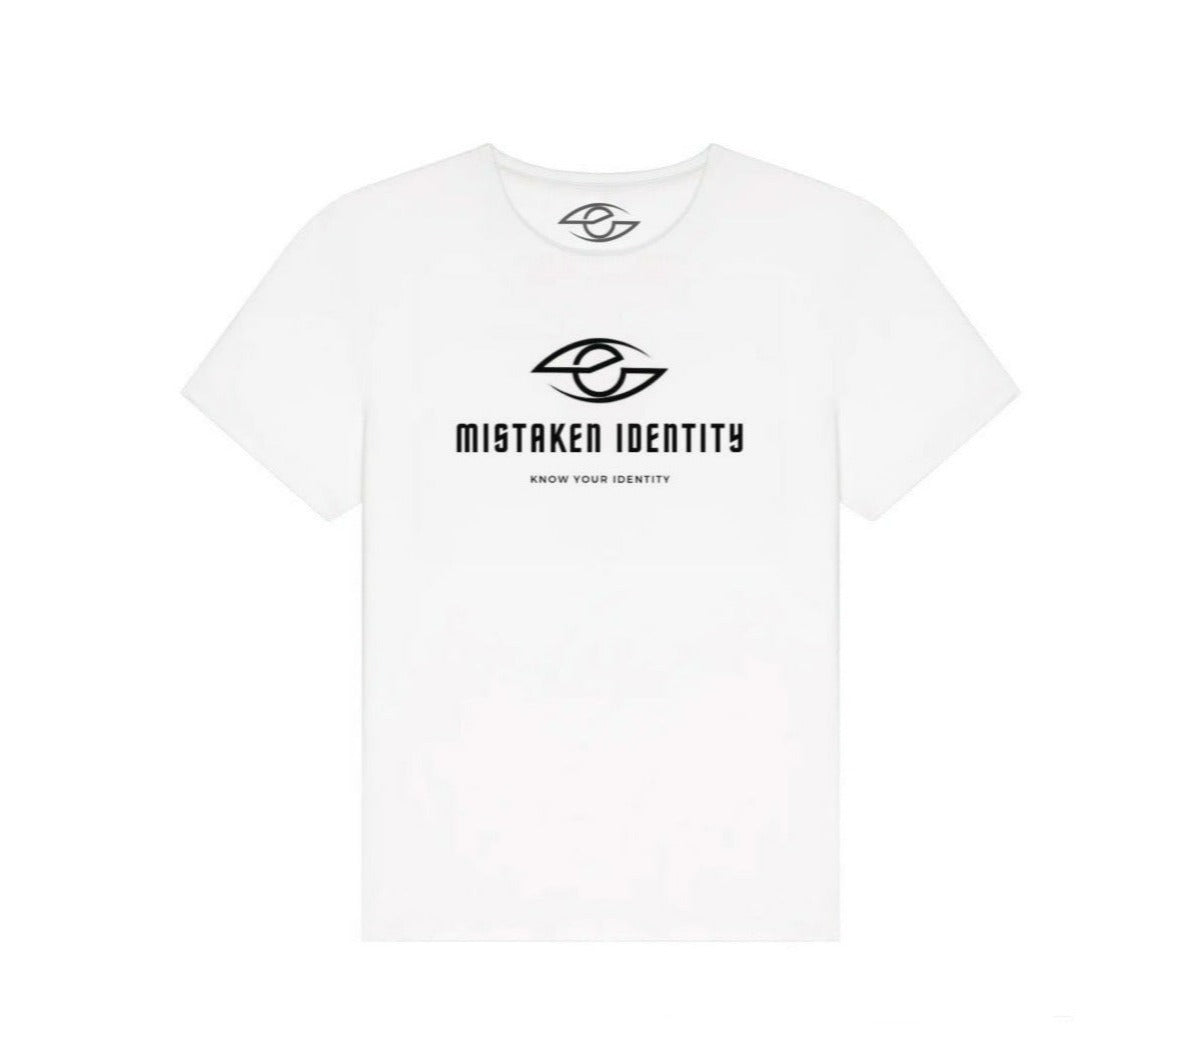 Unisex Original White Mistaken Identity T-shirt